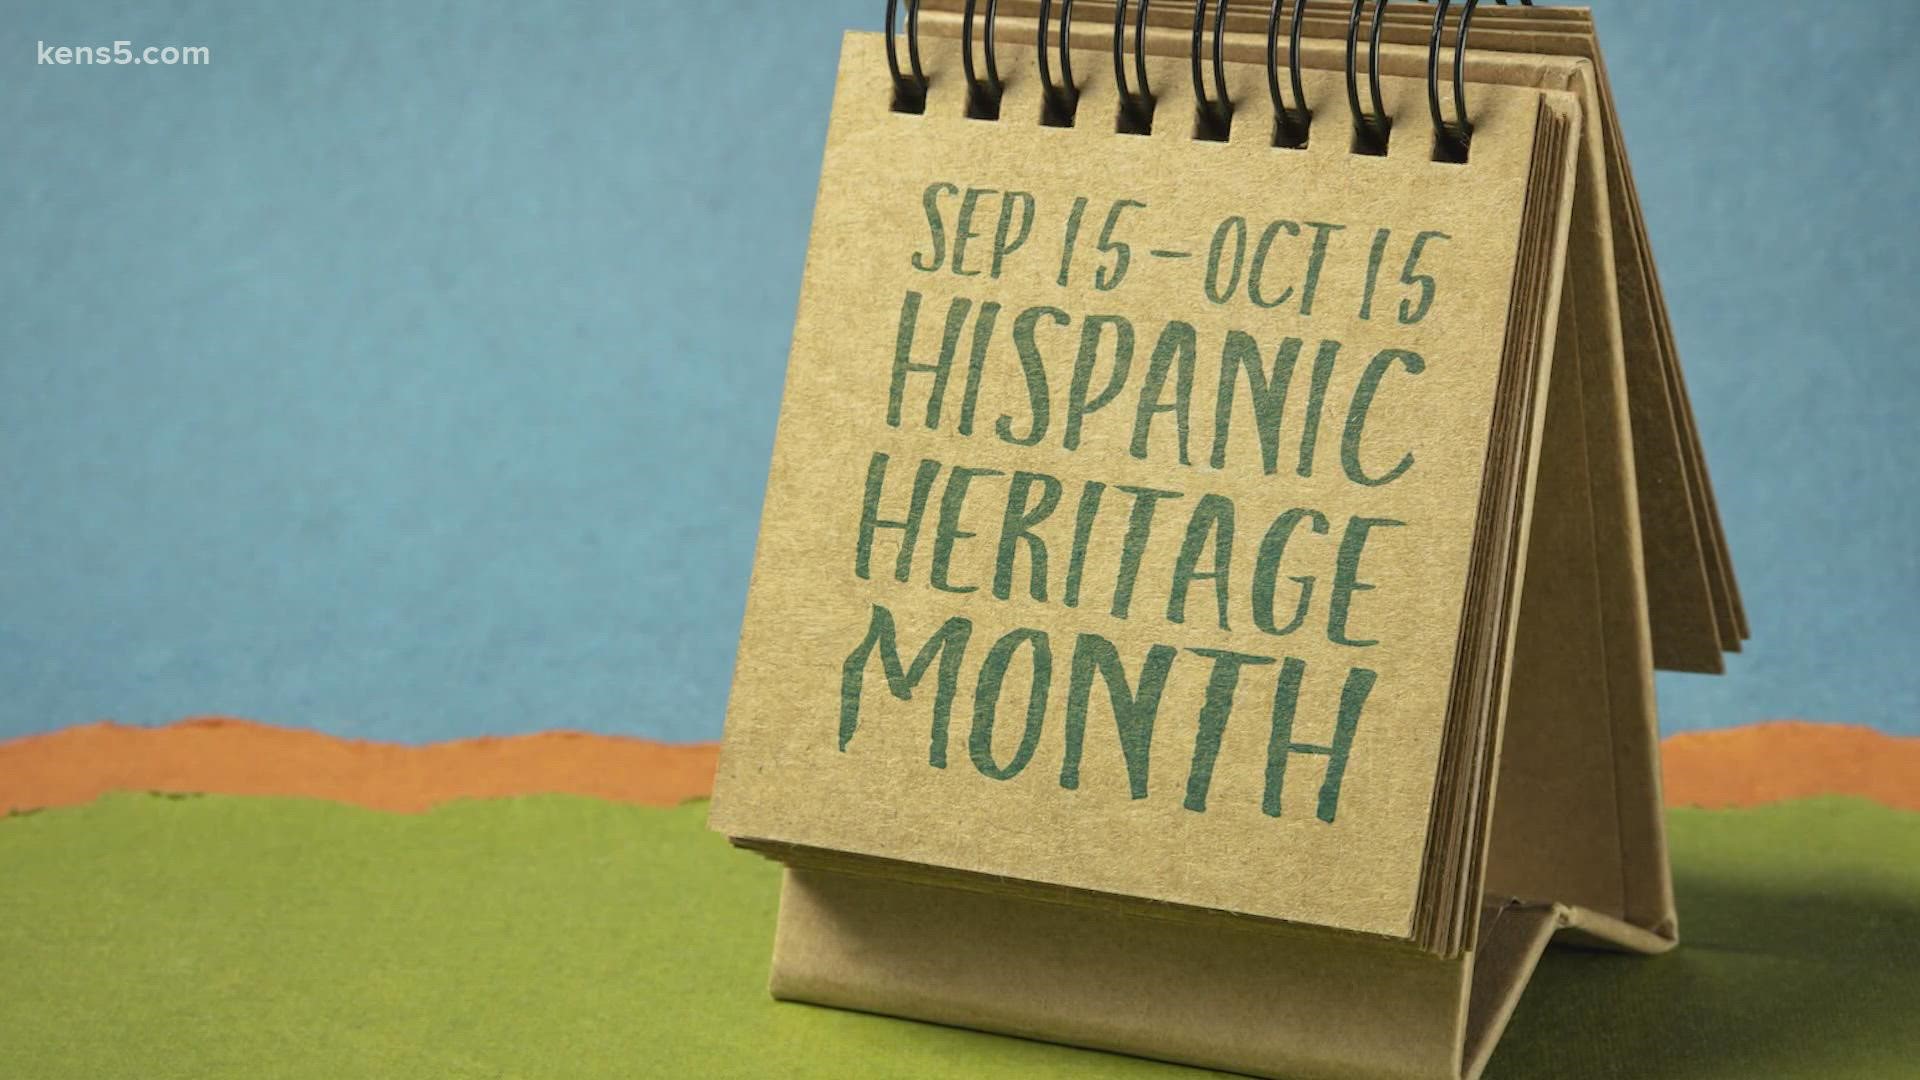 Hispanic Heritage Month runs from September 15 through October 15.